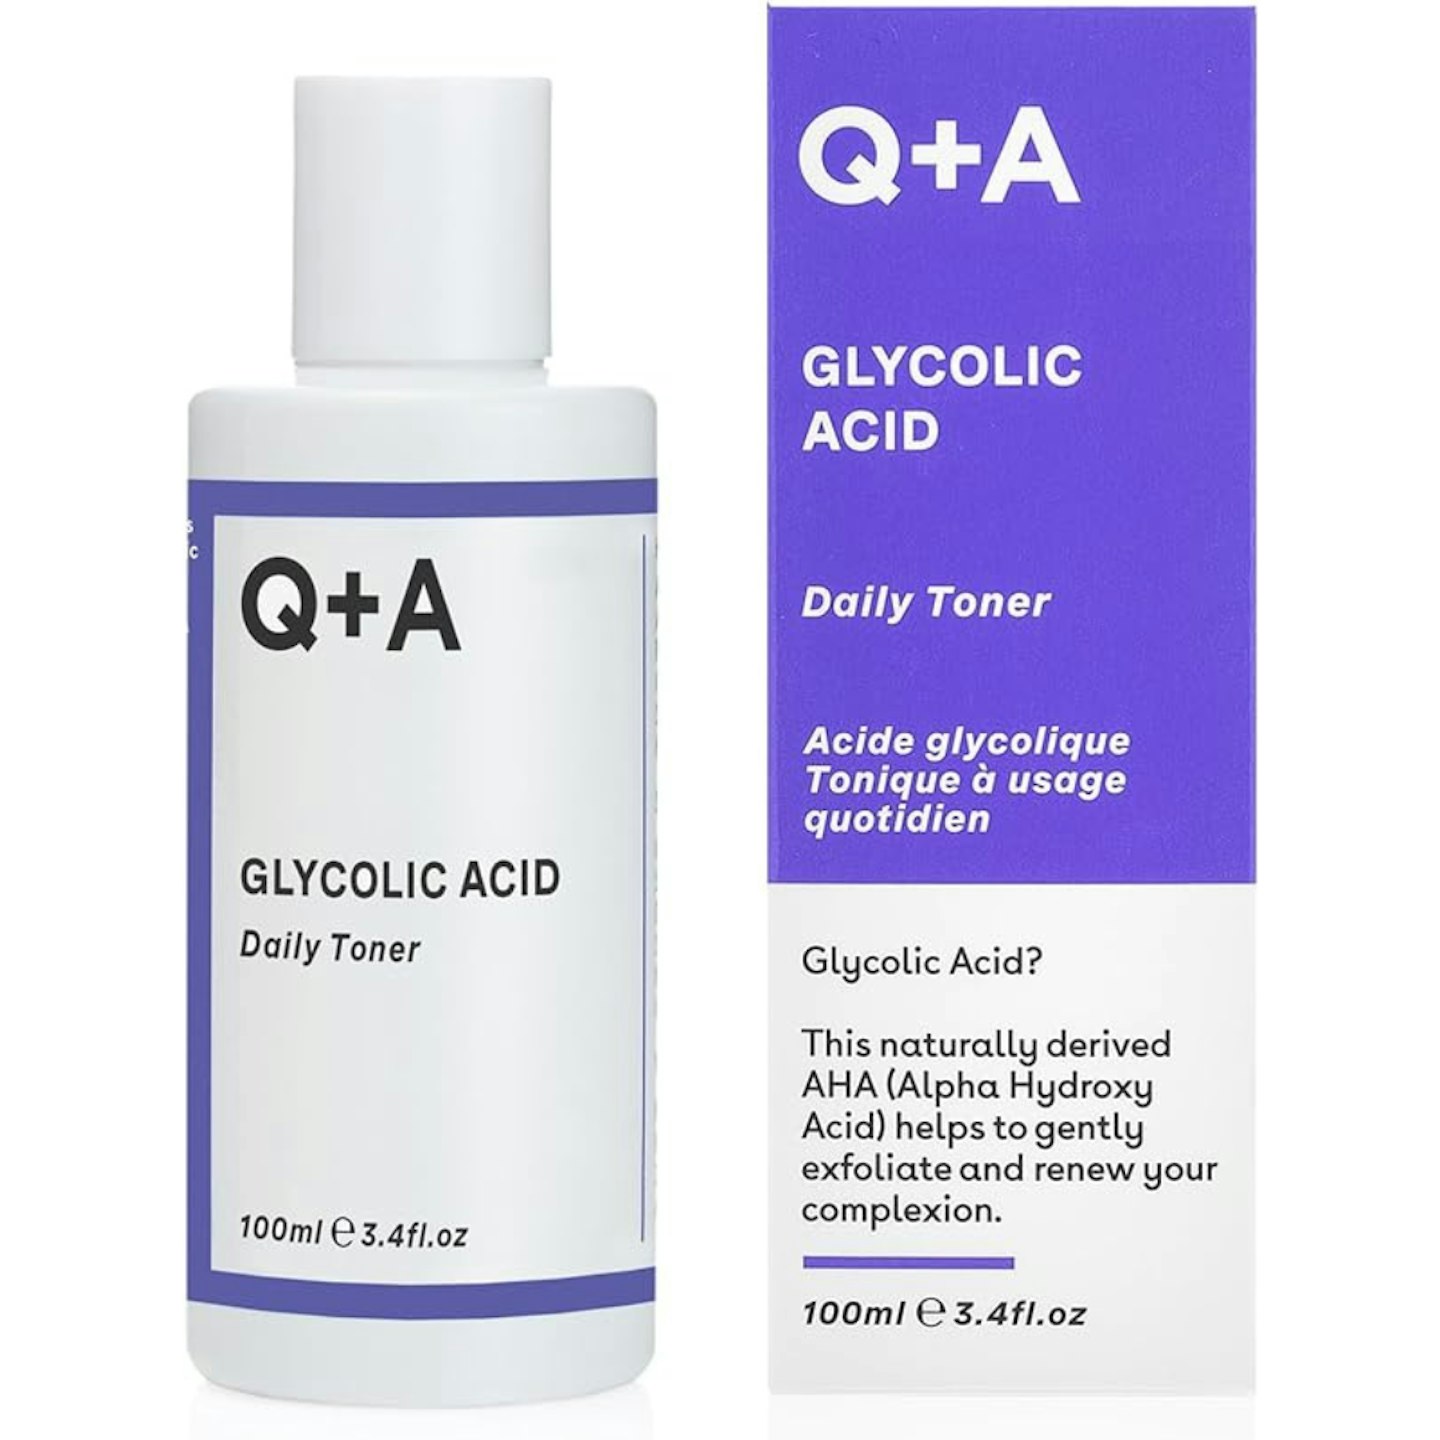 Q+A Glycolic Acid Daily Toner